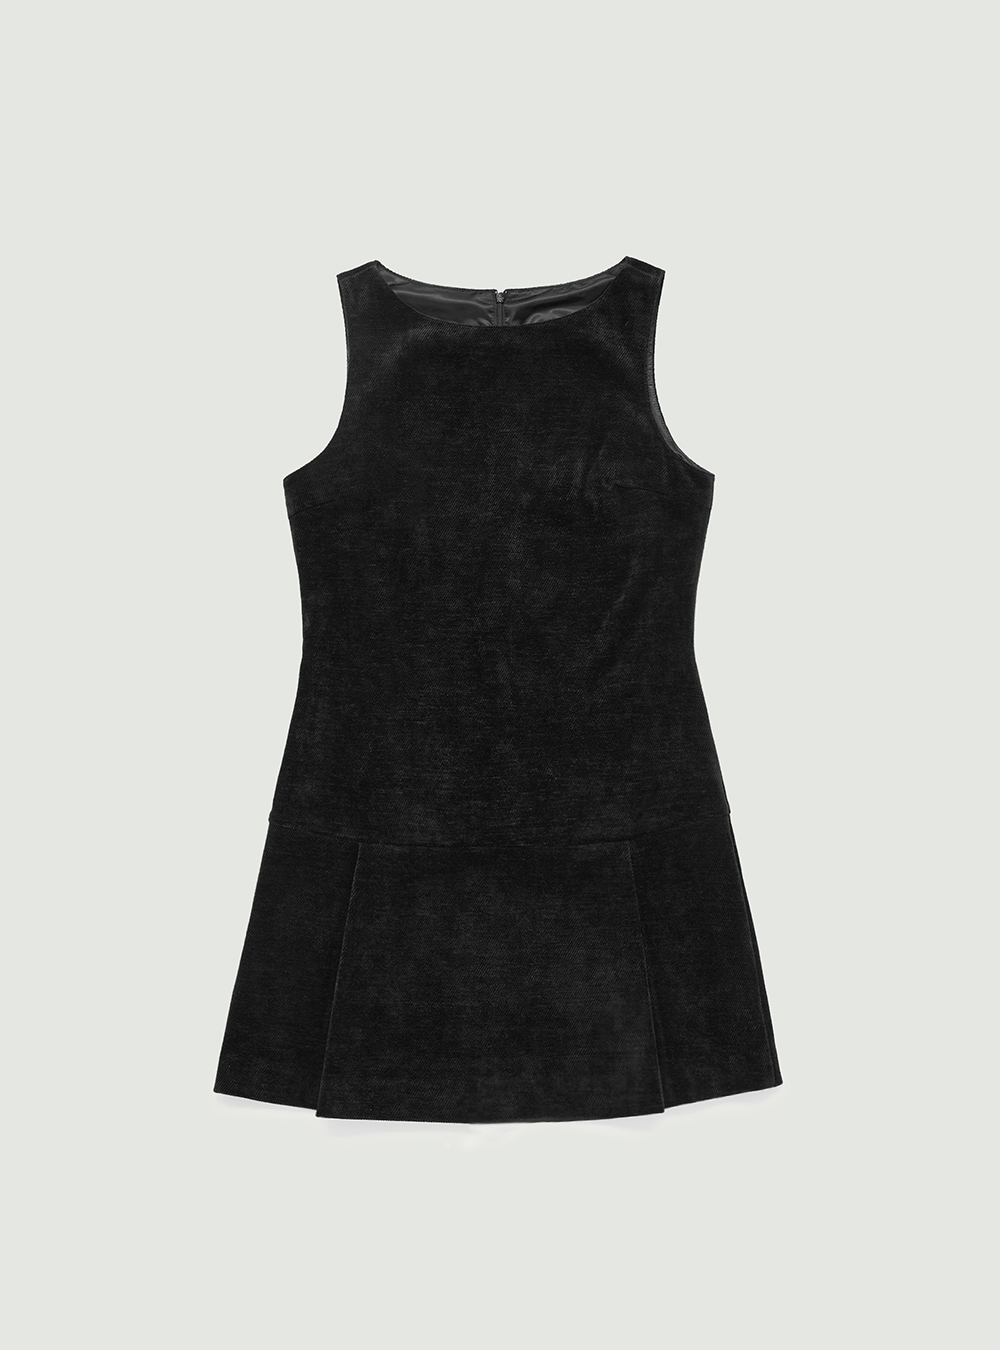 Classic voat neck mini dress. Black